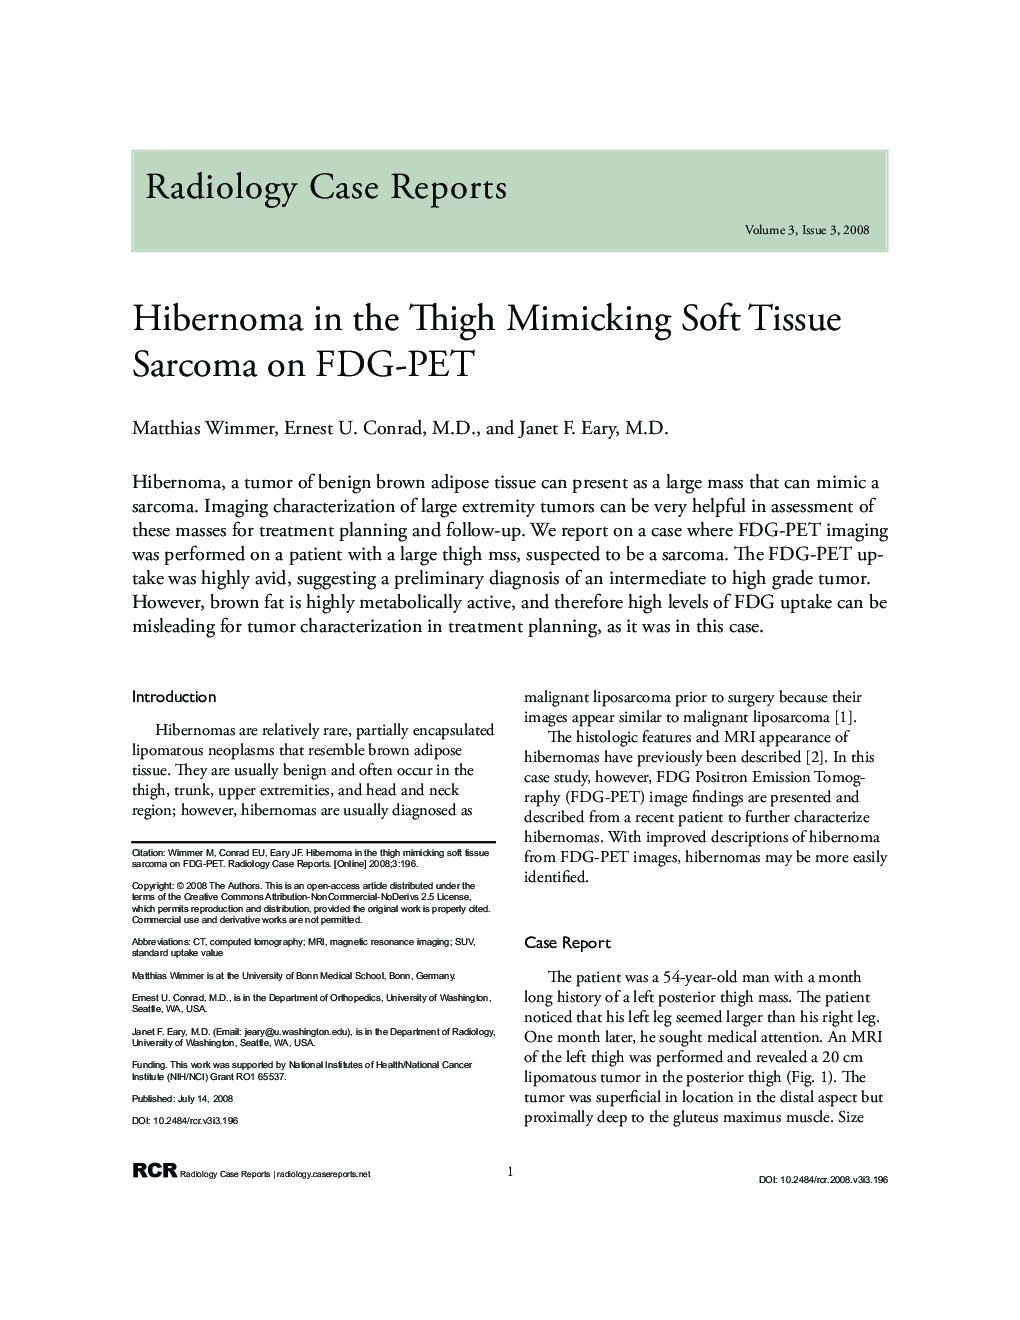 Hibernoma in the Thigh Mimicking Soft Tissue Sarcoma on FDG-PET